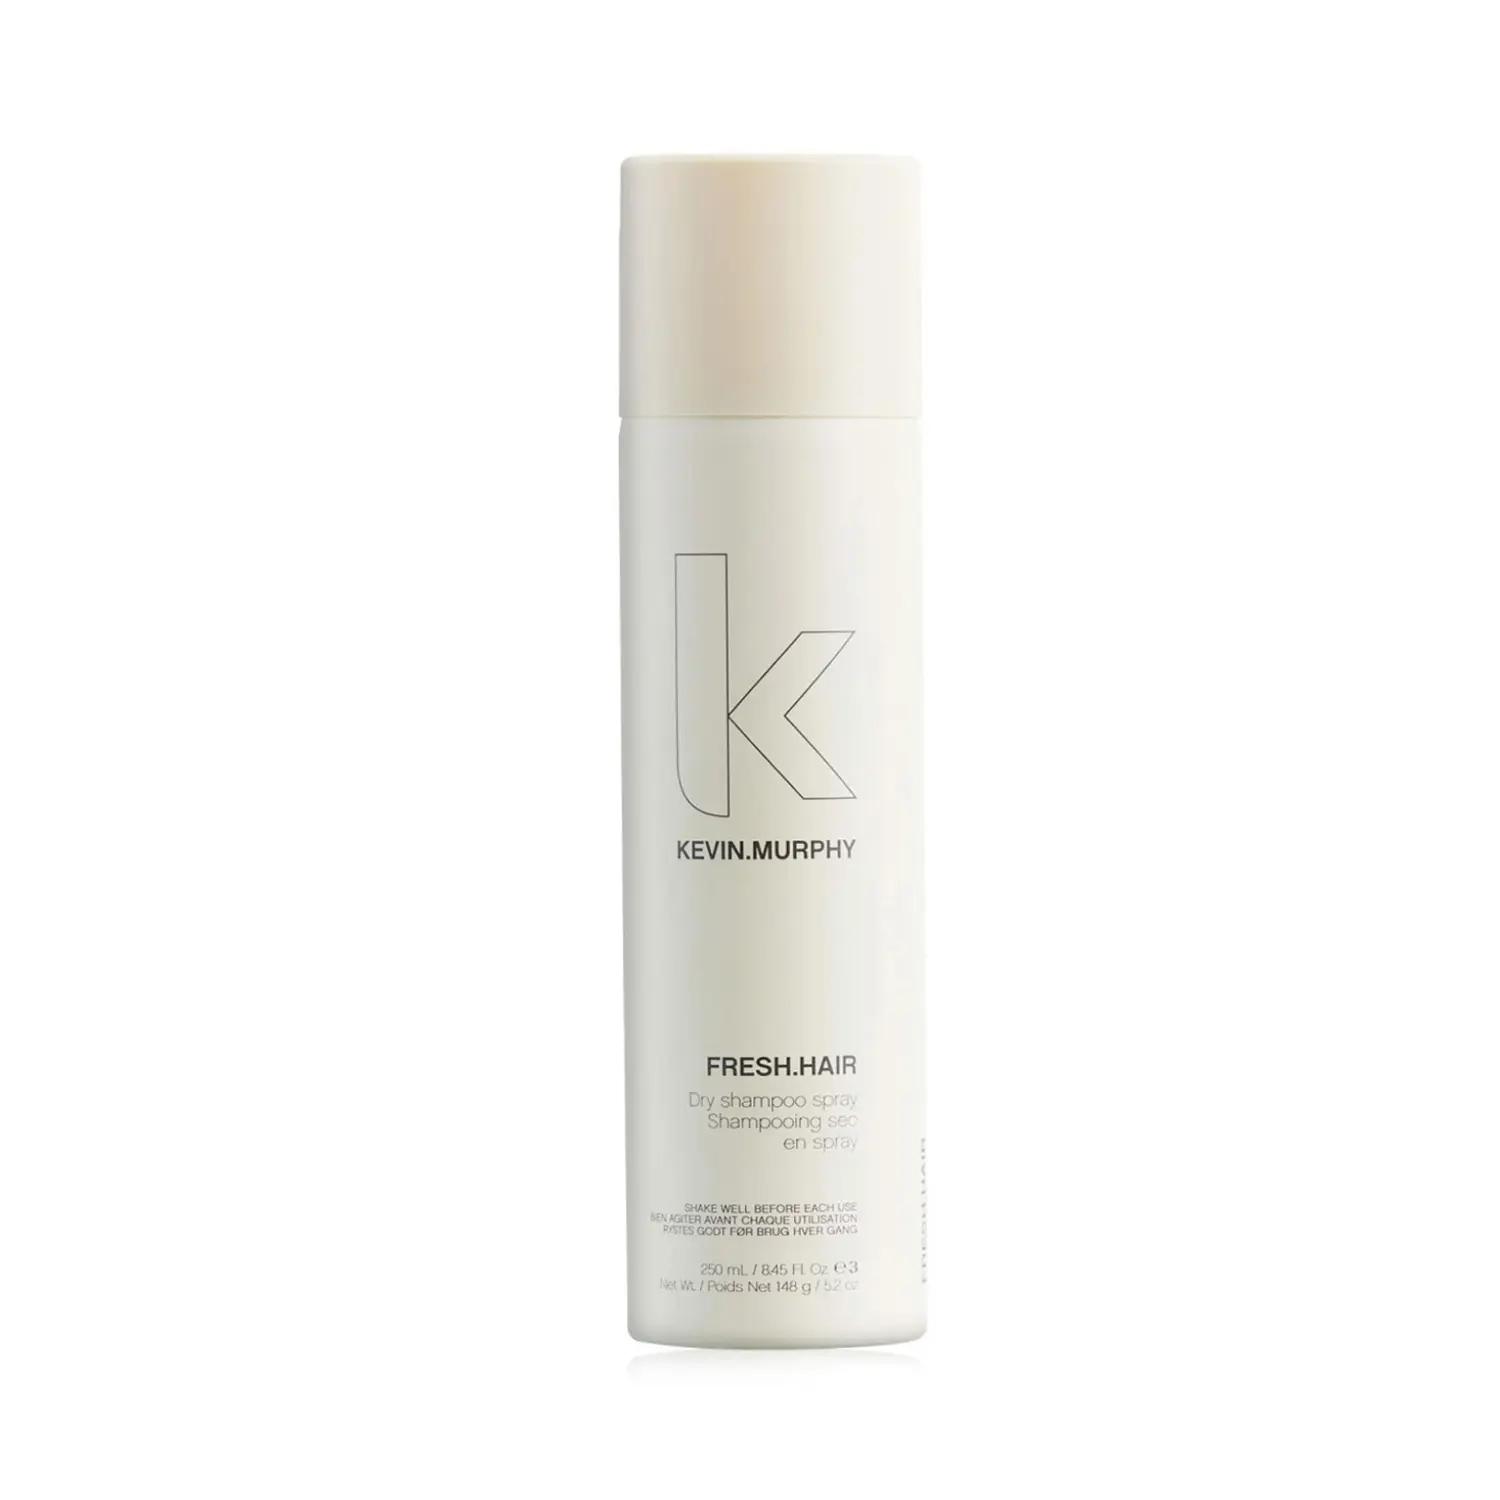 kevin murphy fresh hair dry shampoo spray (250ml)